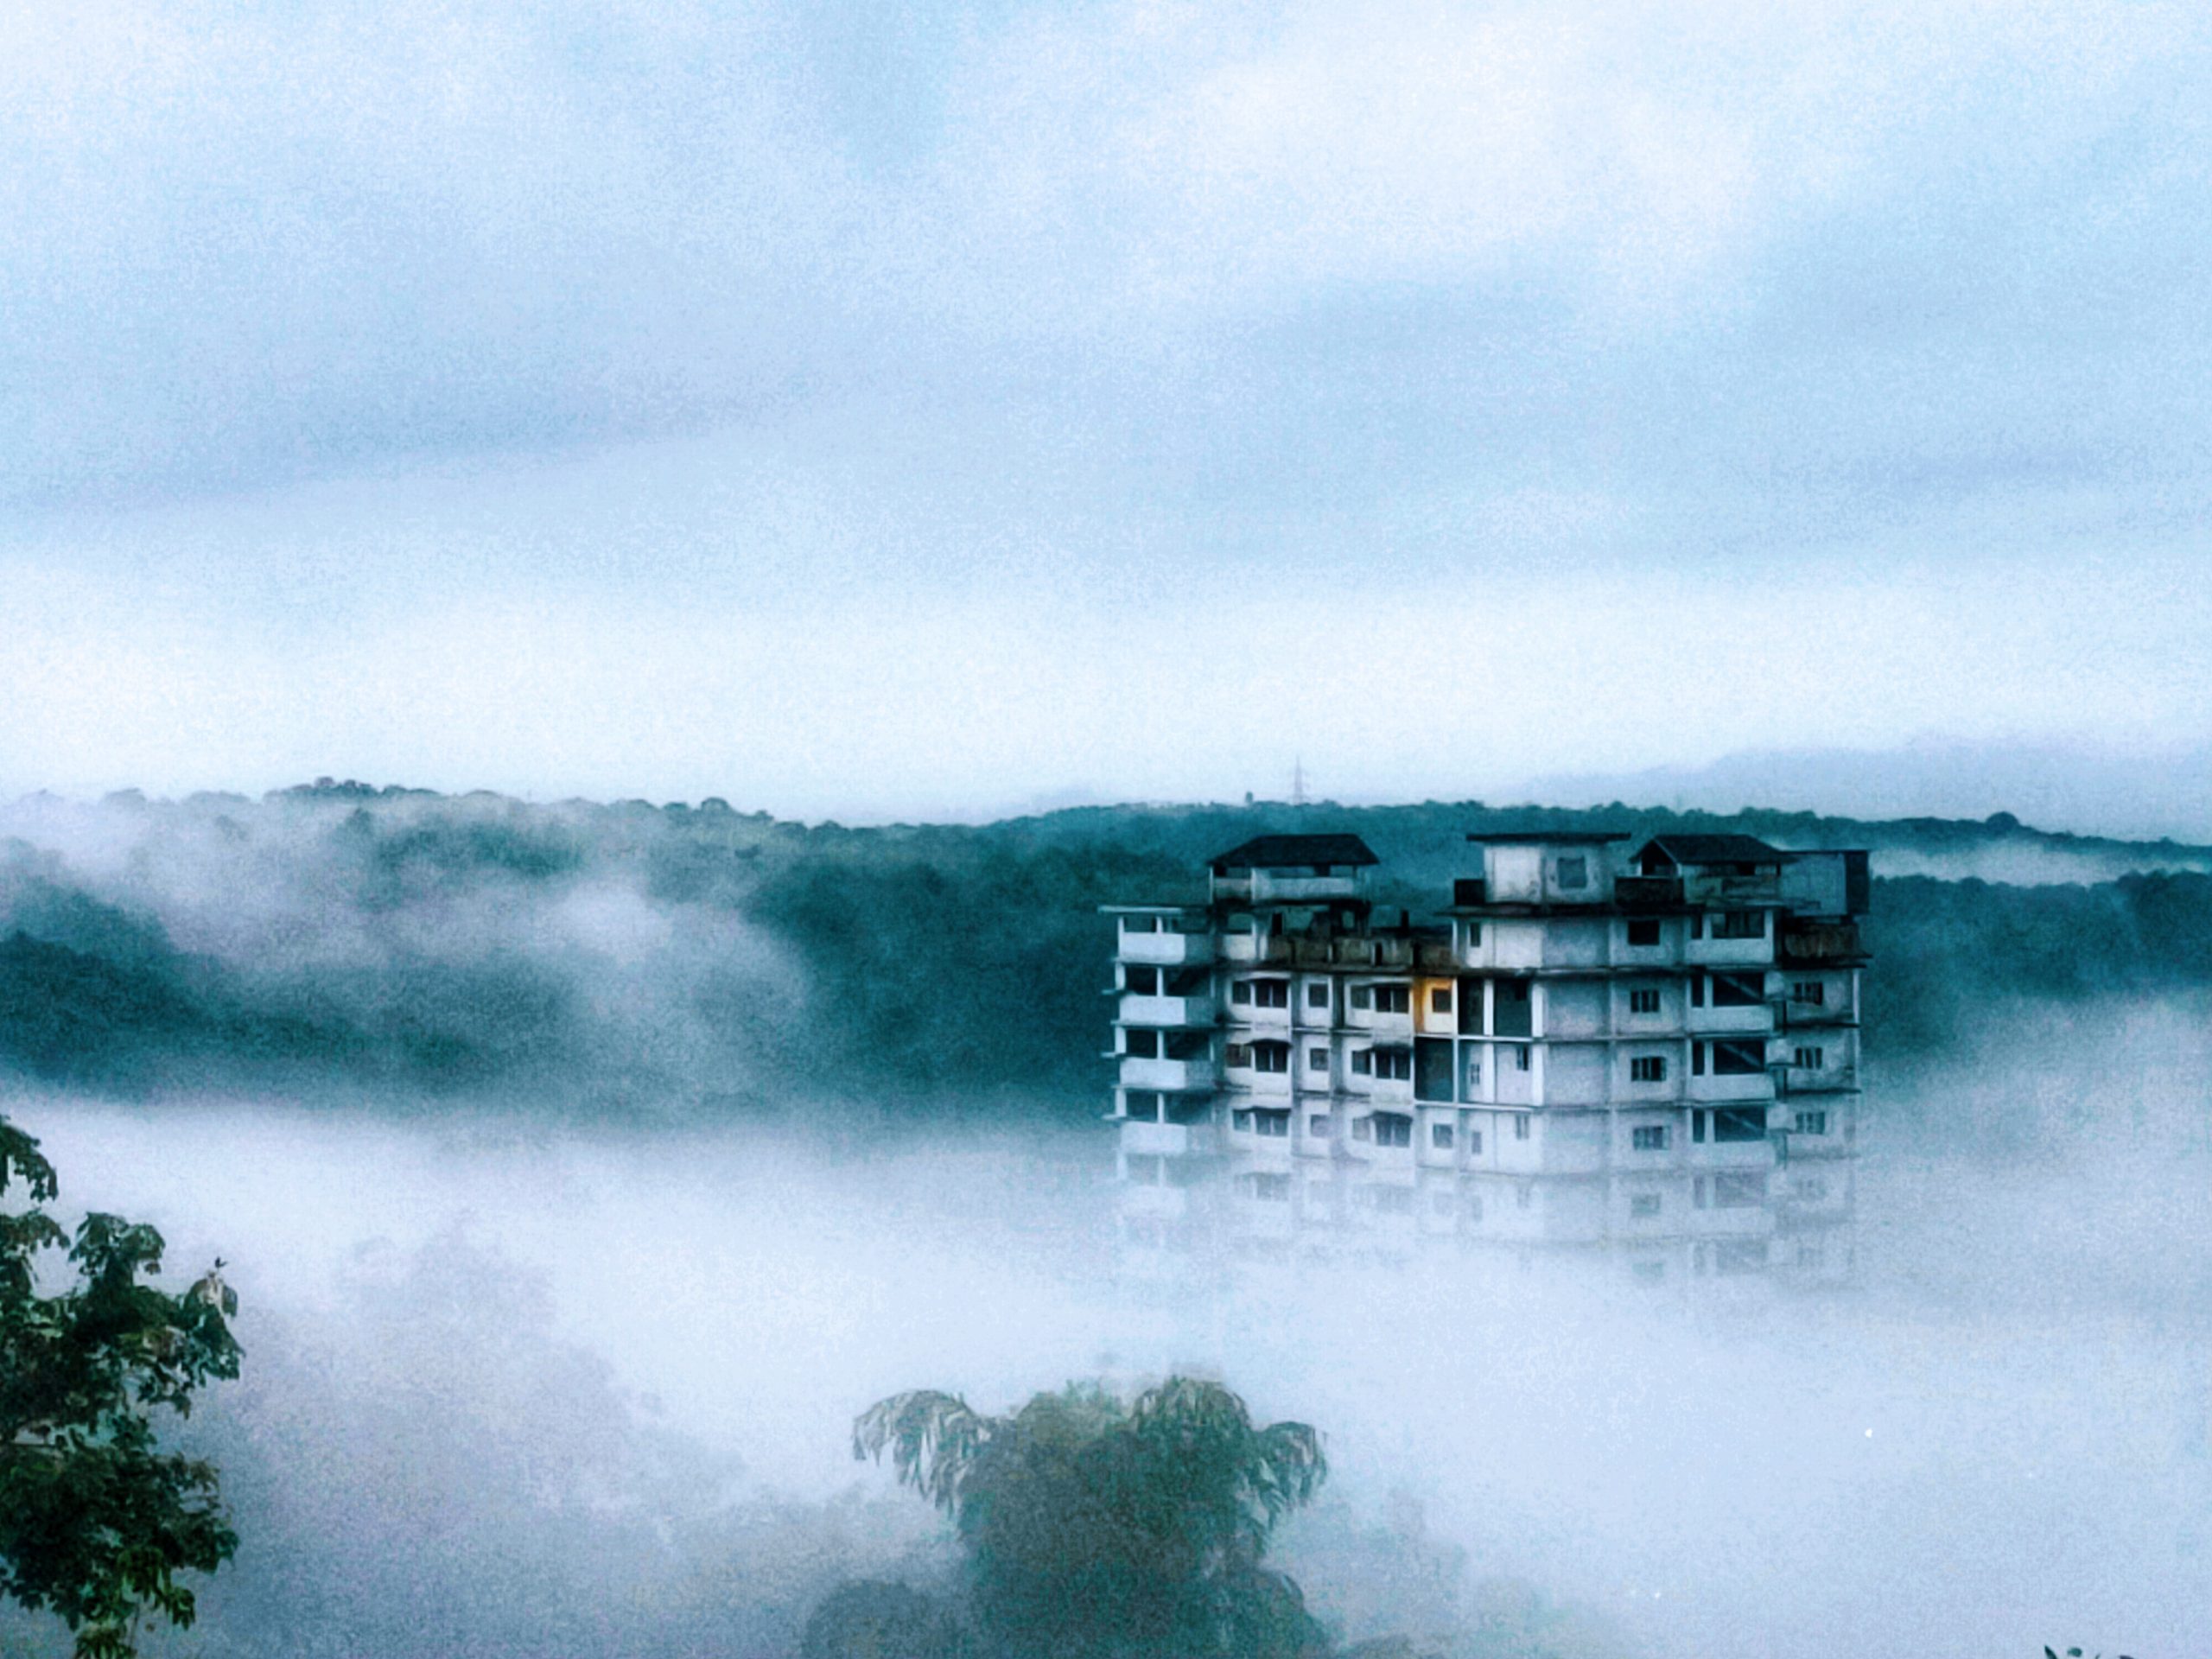 Winter fog near a building